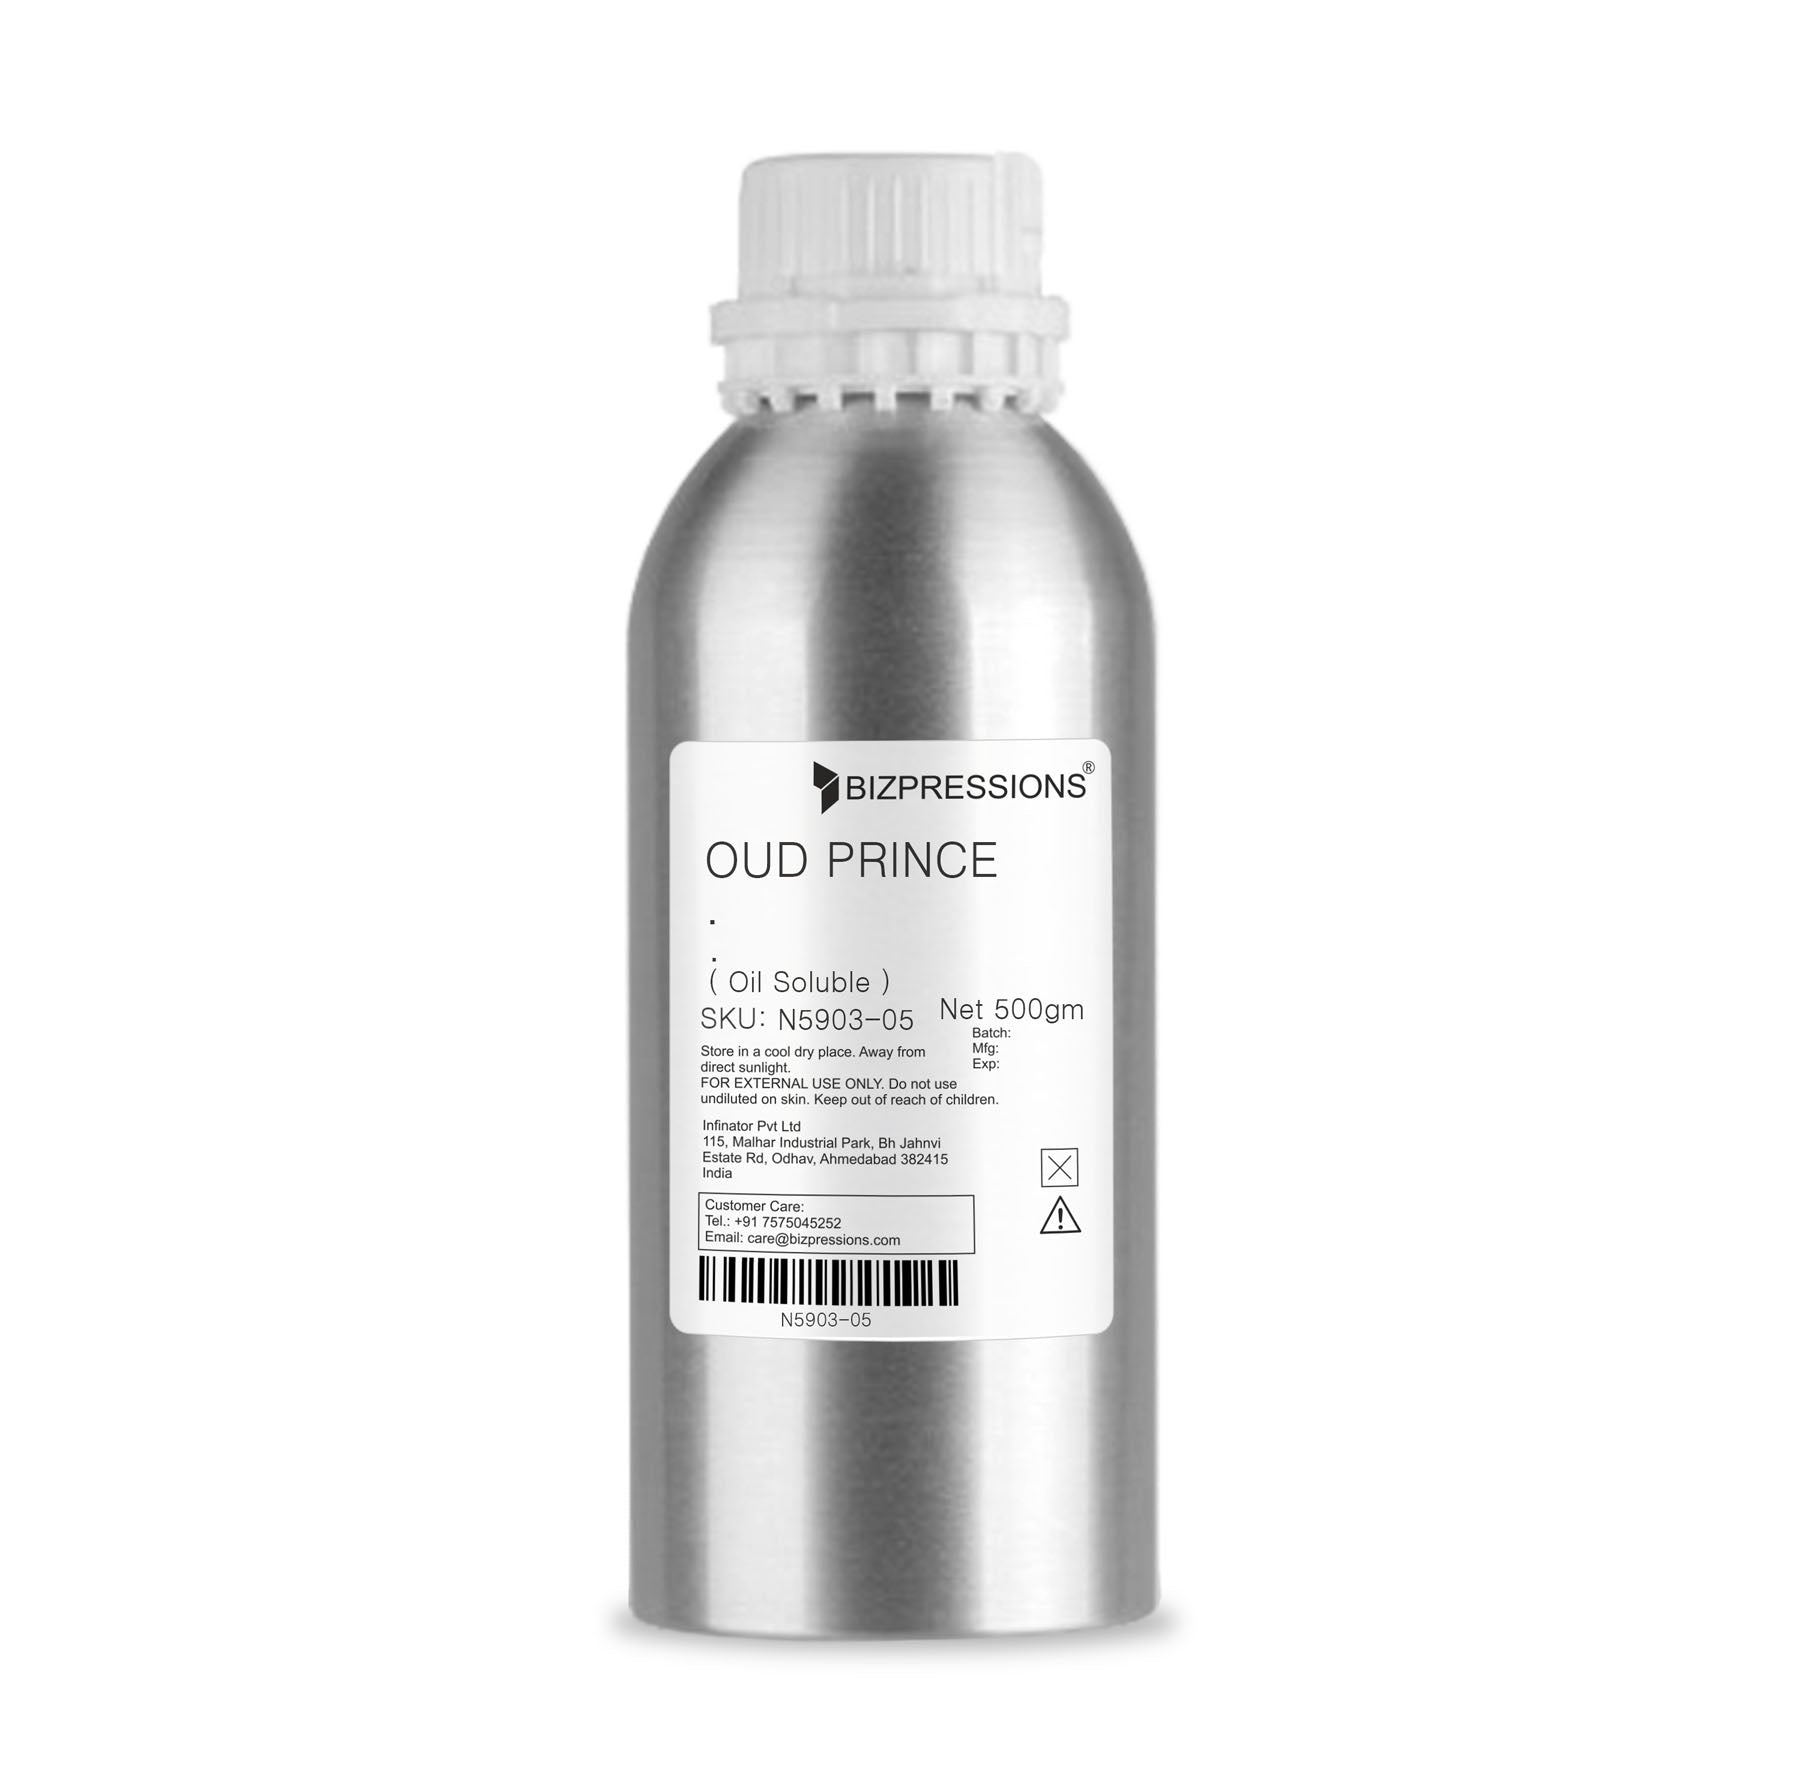 OUD PRINCE - Fragrance ( Oil Soluble ) - 500 gm